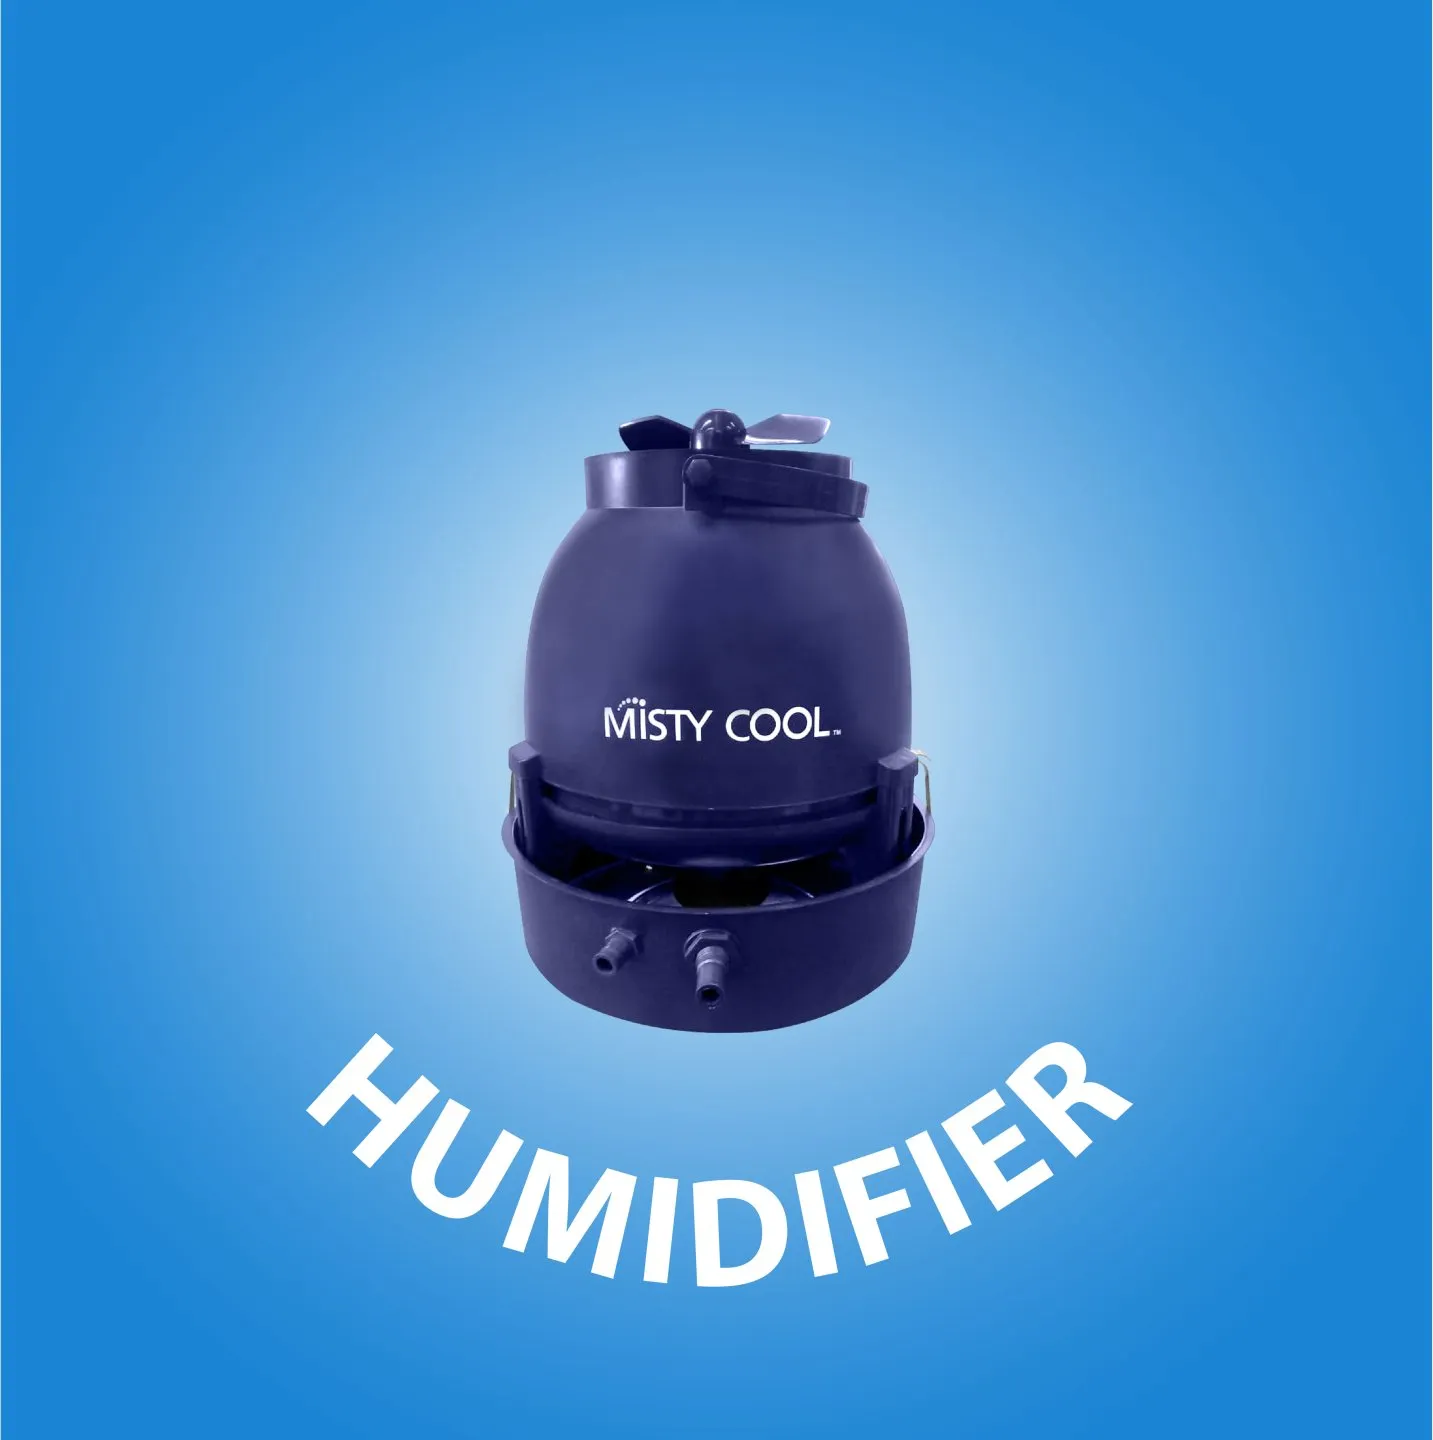  Humidifier cover kategori website 25